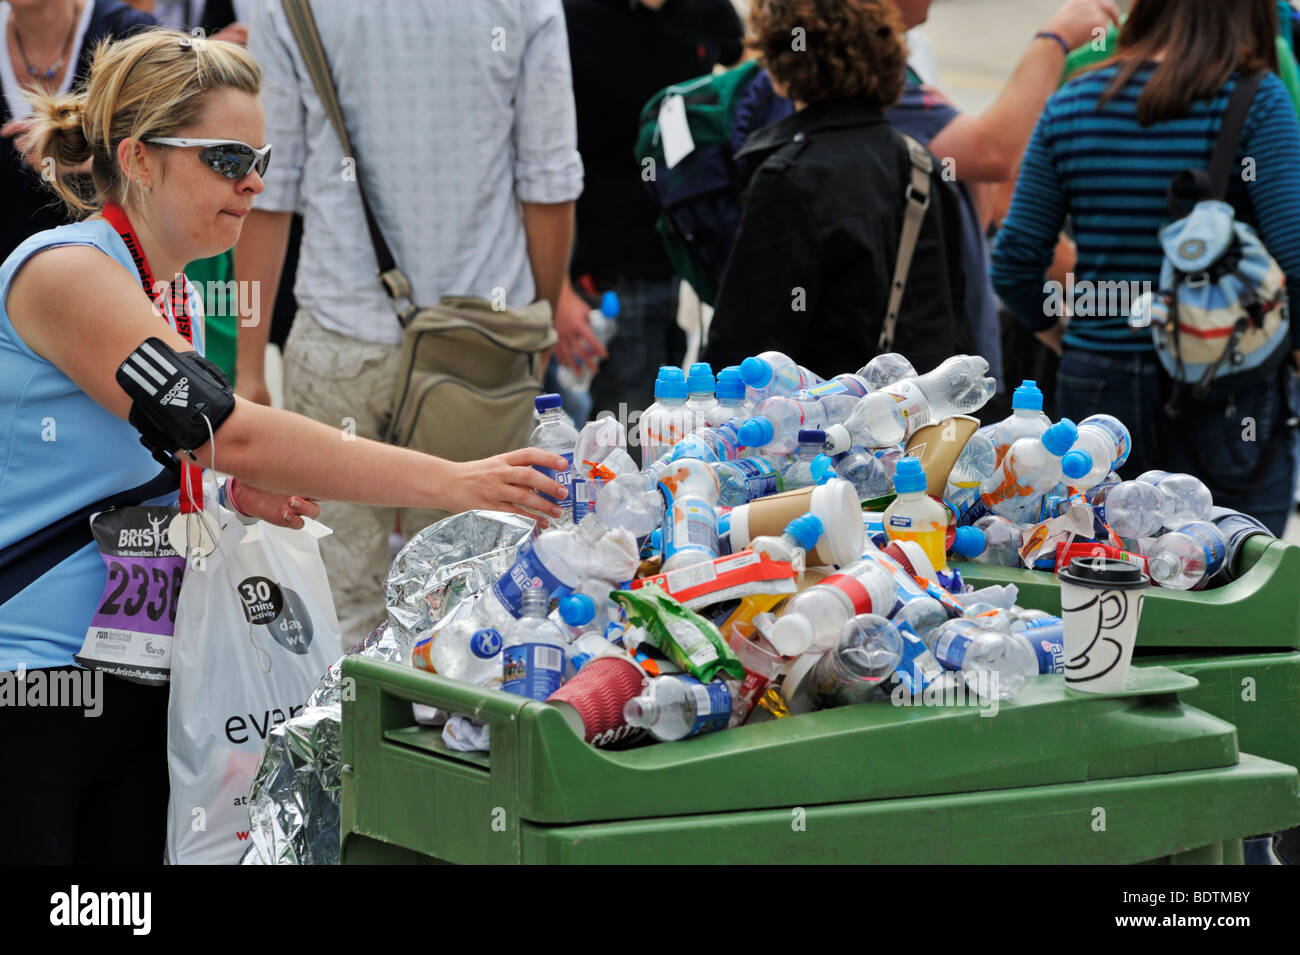 Young woman disposing drinks bottle in bin. Bristol Half Marathon Stock Photo